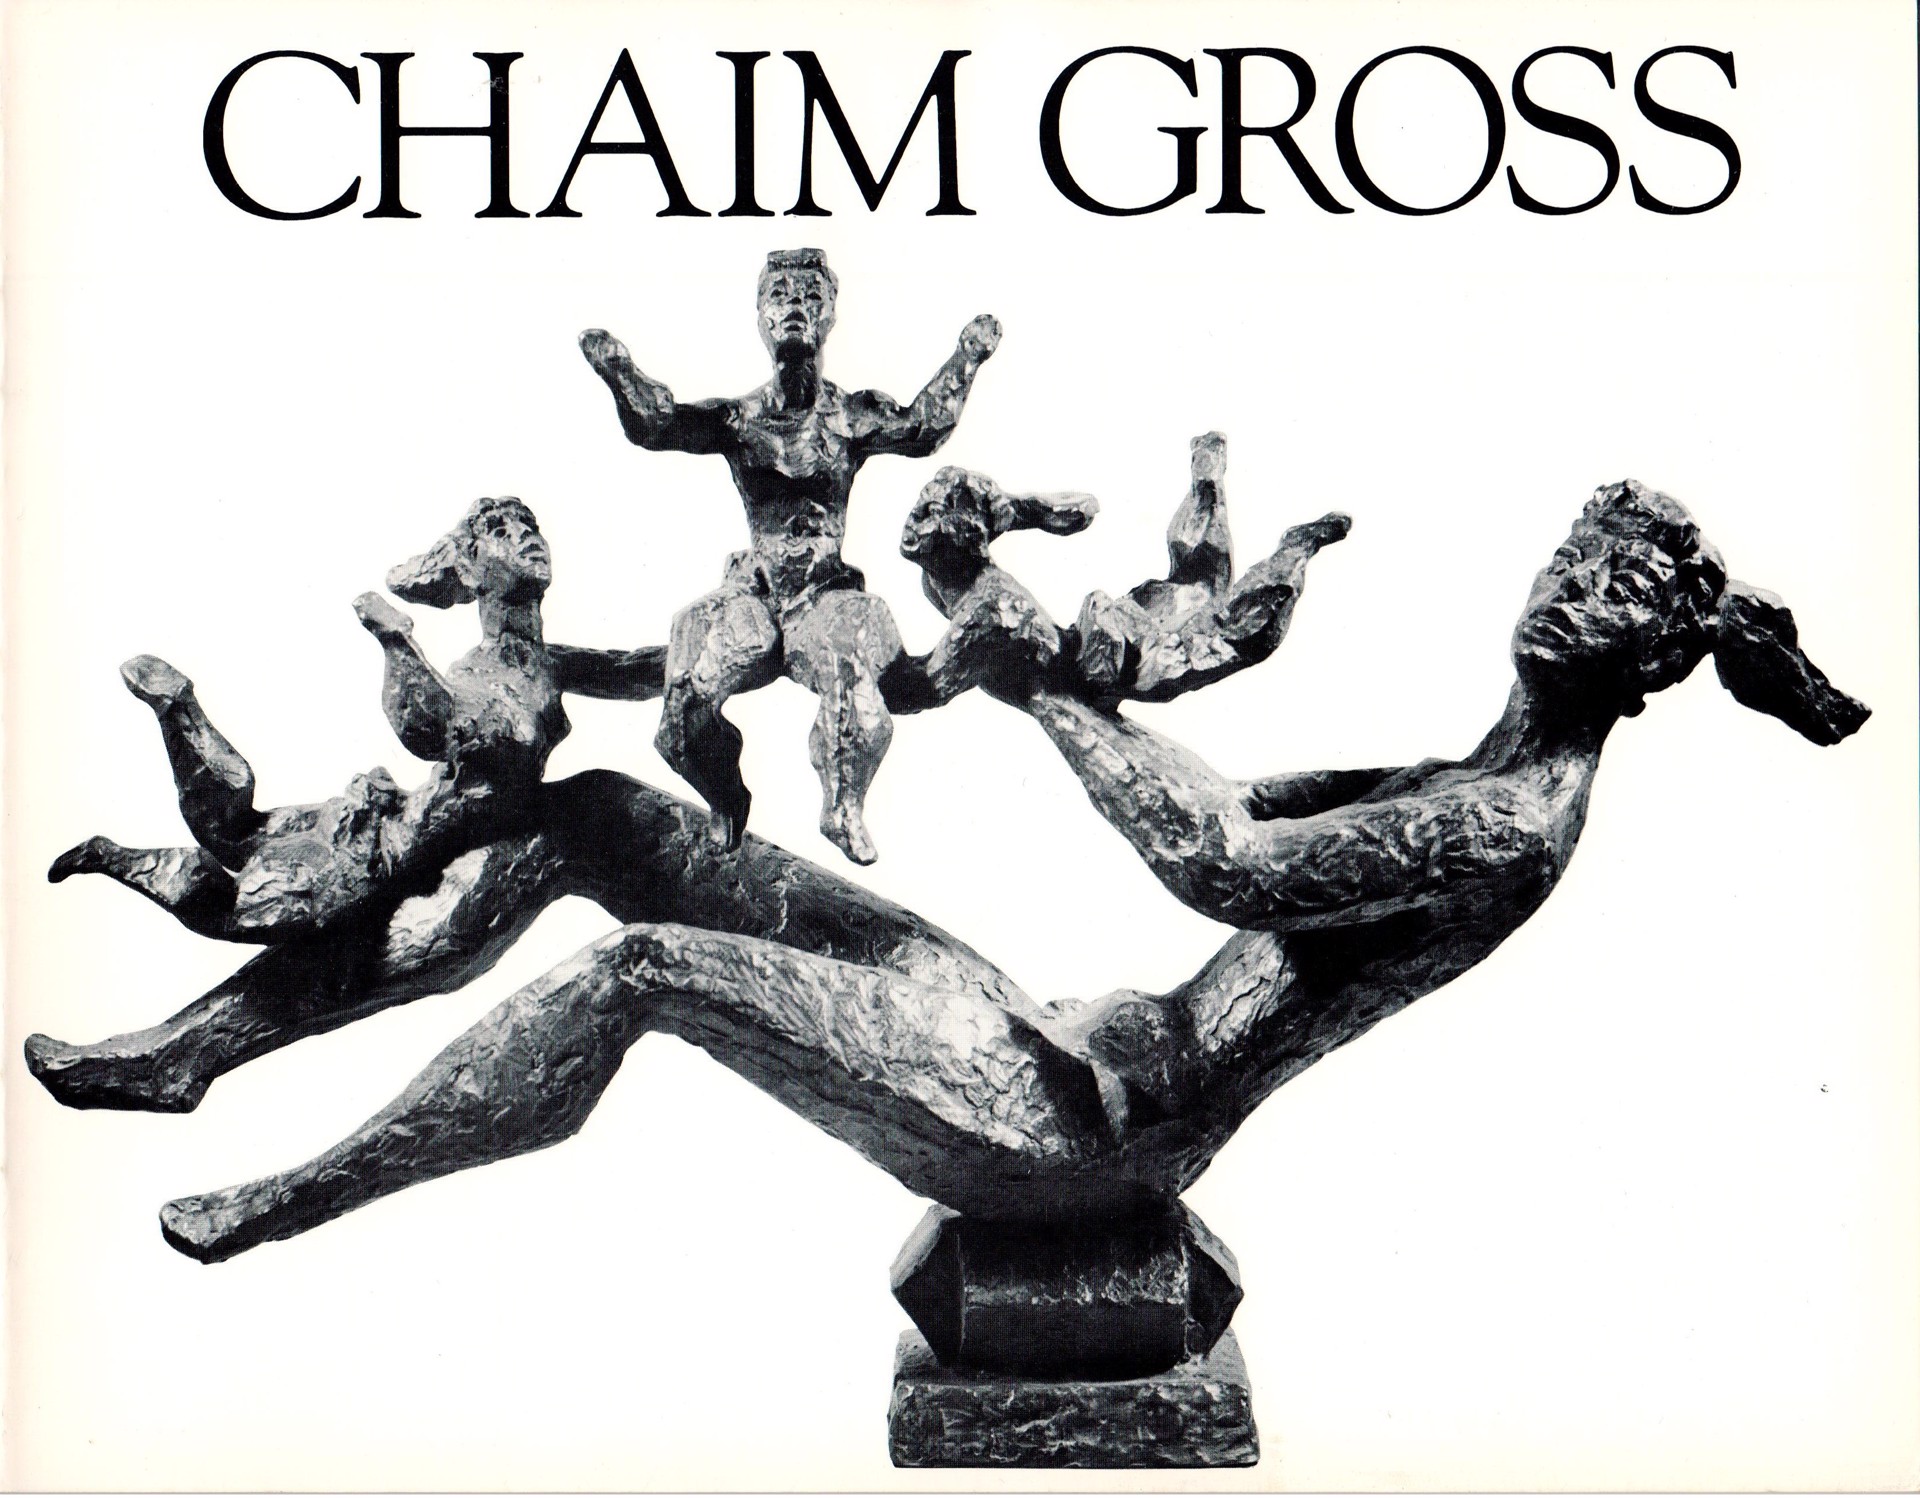 Chaim Gross: An exhibition of bronze sculpture, watercolors, drawings & original lithographs by Chaim Gross